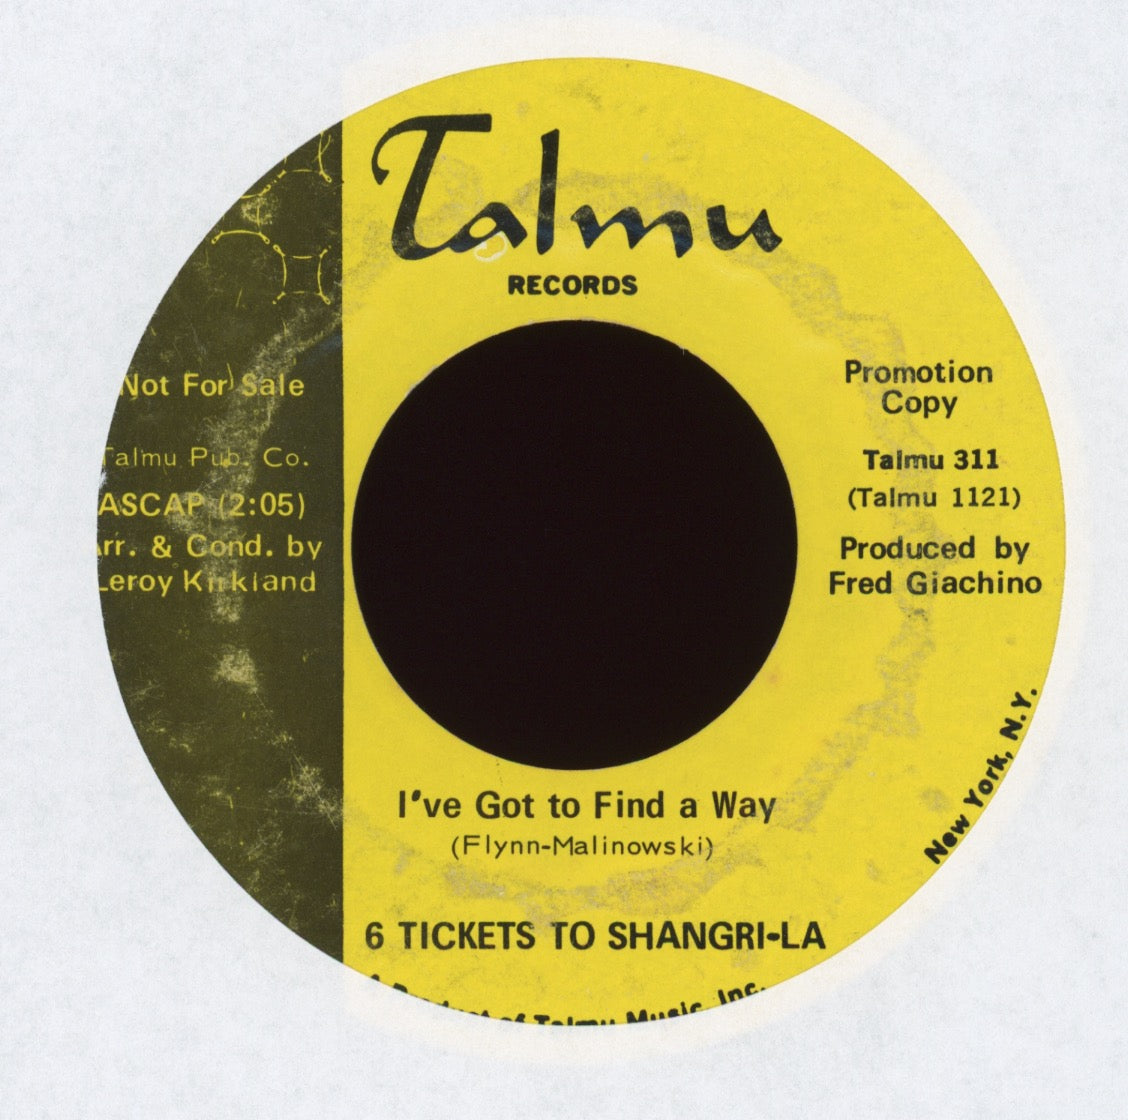 6 Tickets To Shangri-la - I've Got to Find a Way on Talmu Promo